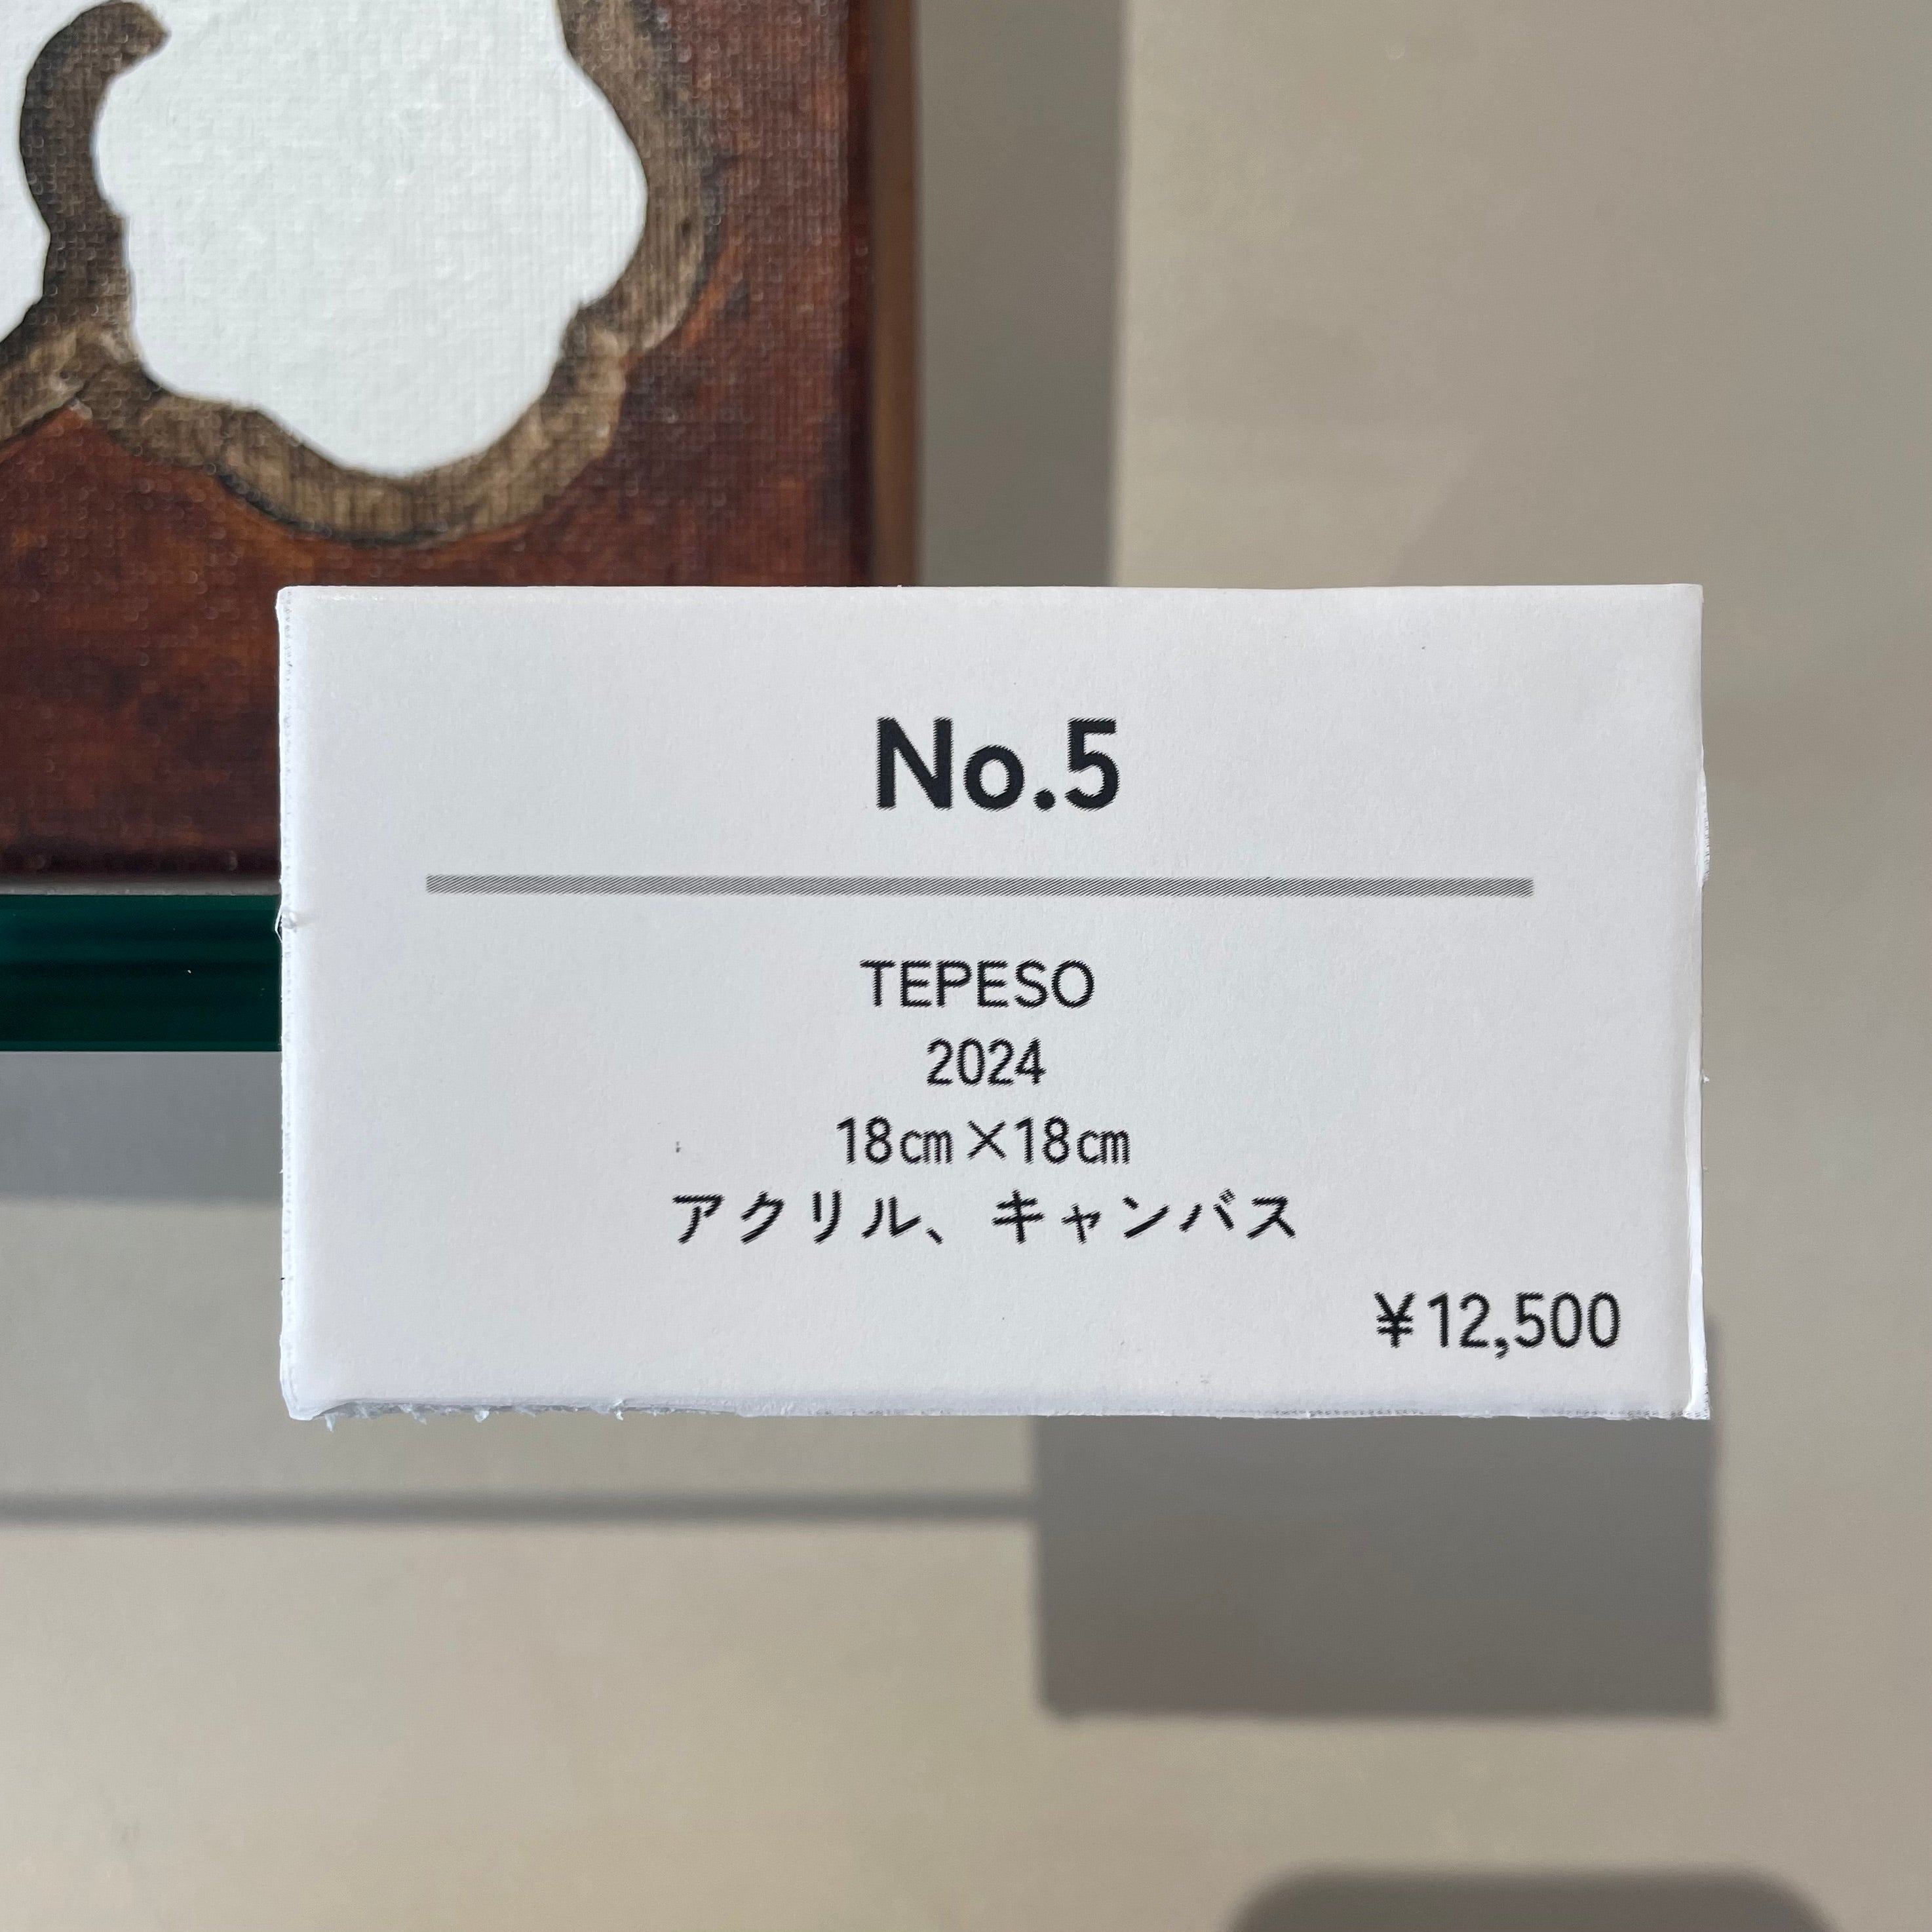 TEPESO 2024 NO.5